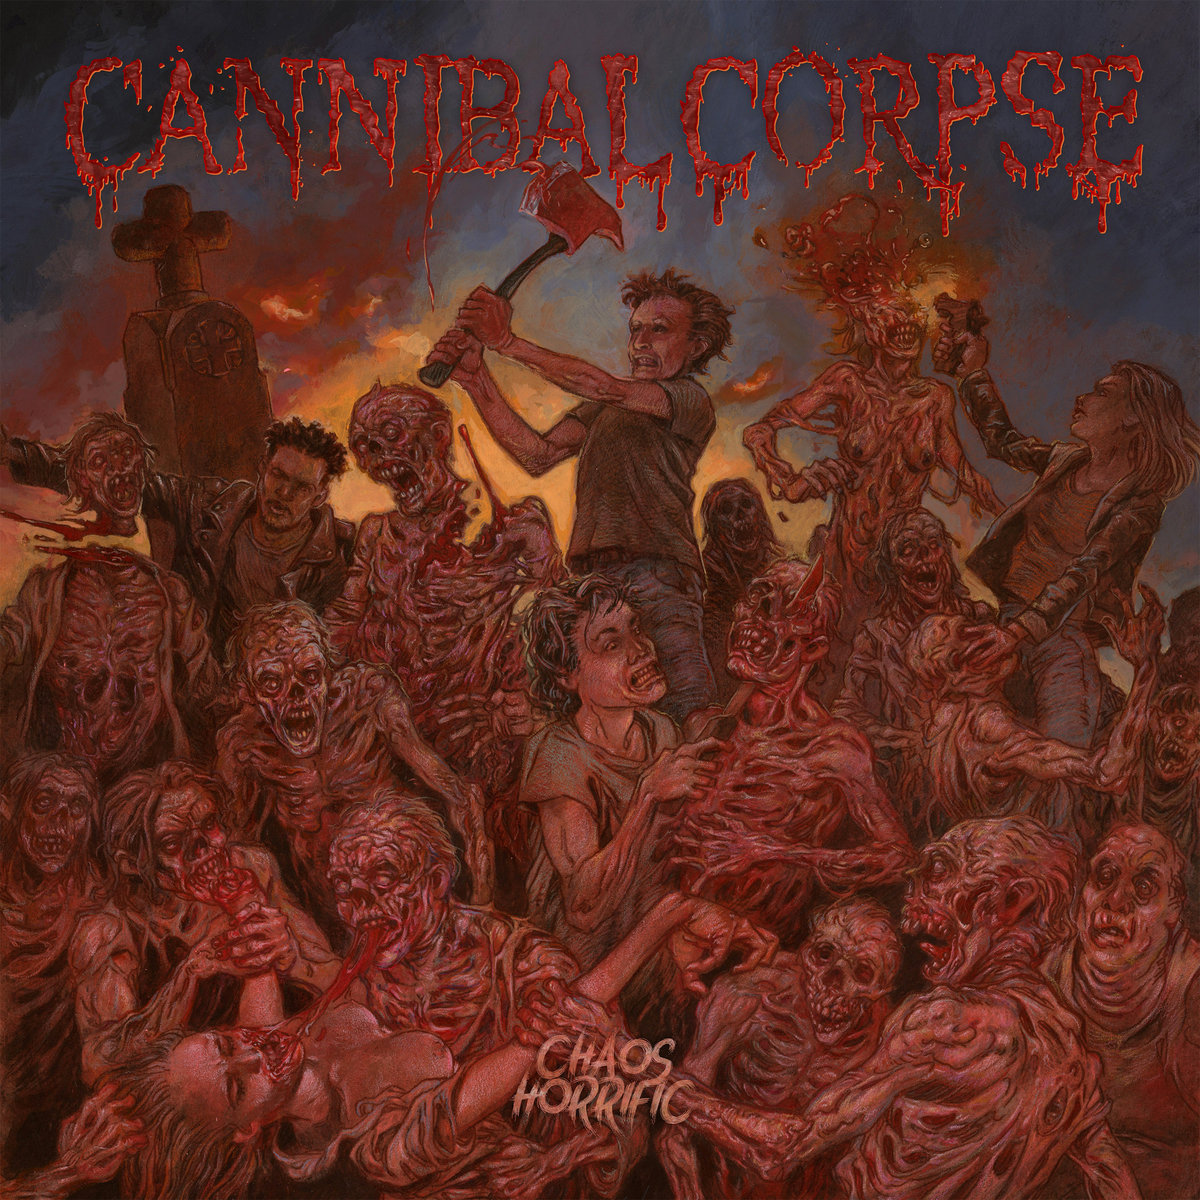 Album art courtesy of Cannibal Corpse